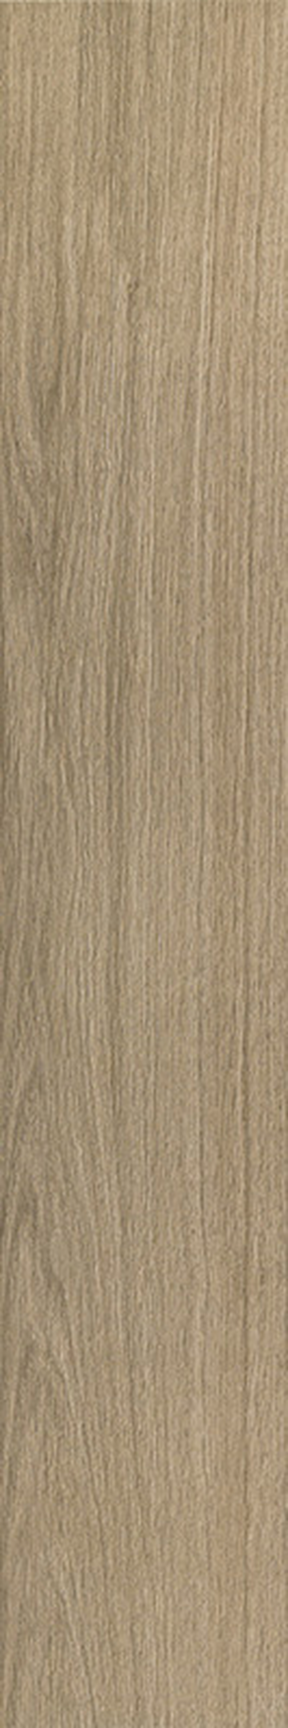 Wheat Floor/Wall Tile 8x48